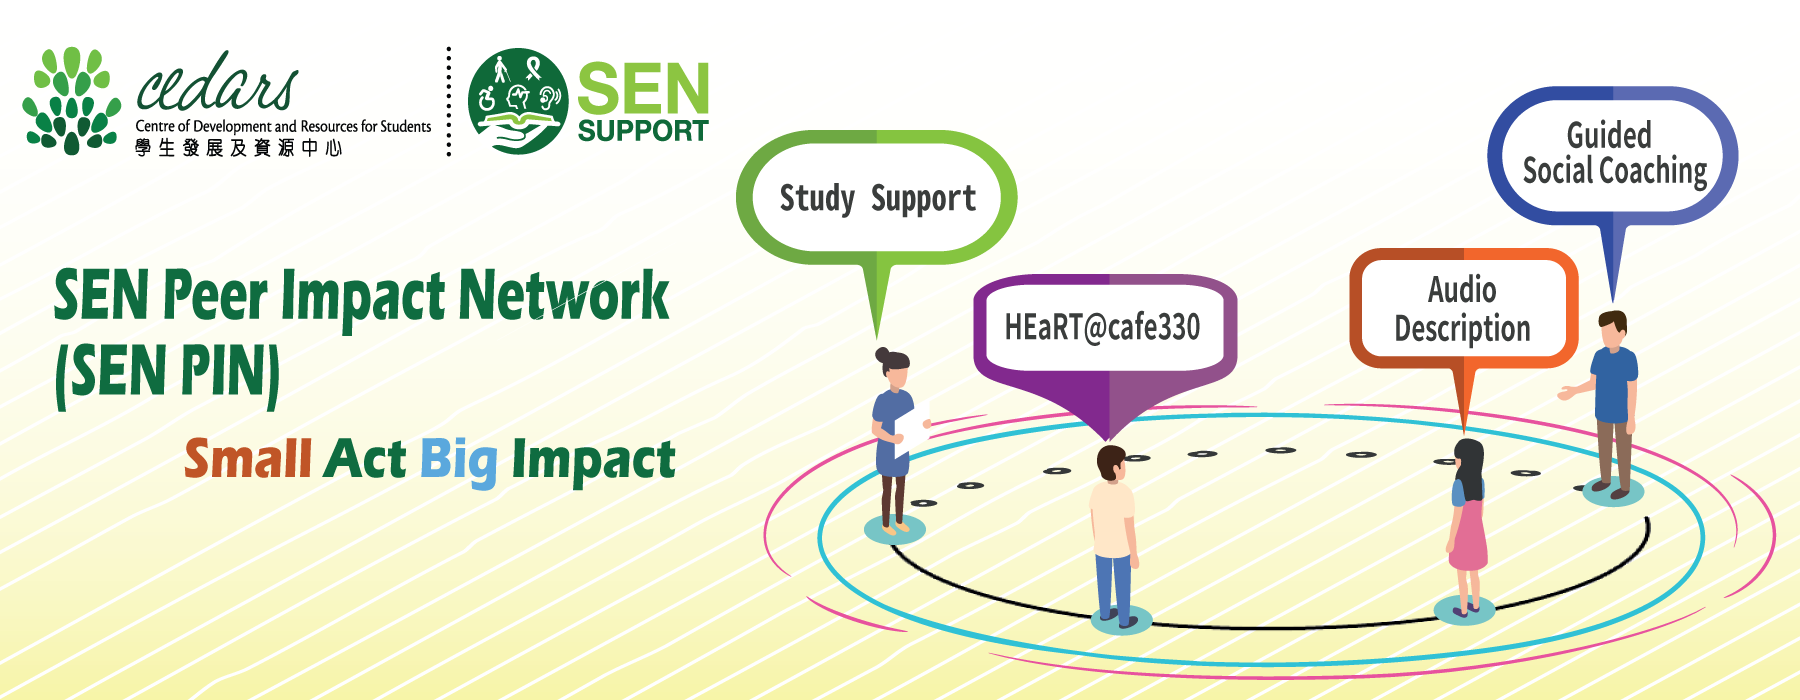 SEN Peer Impact Network Small Act BIG IMPACT